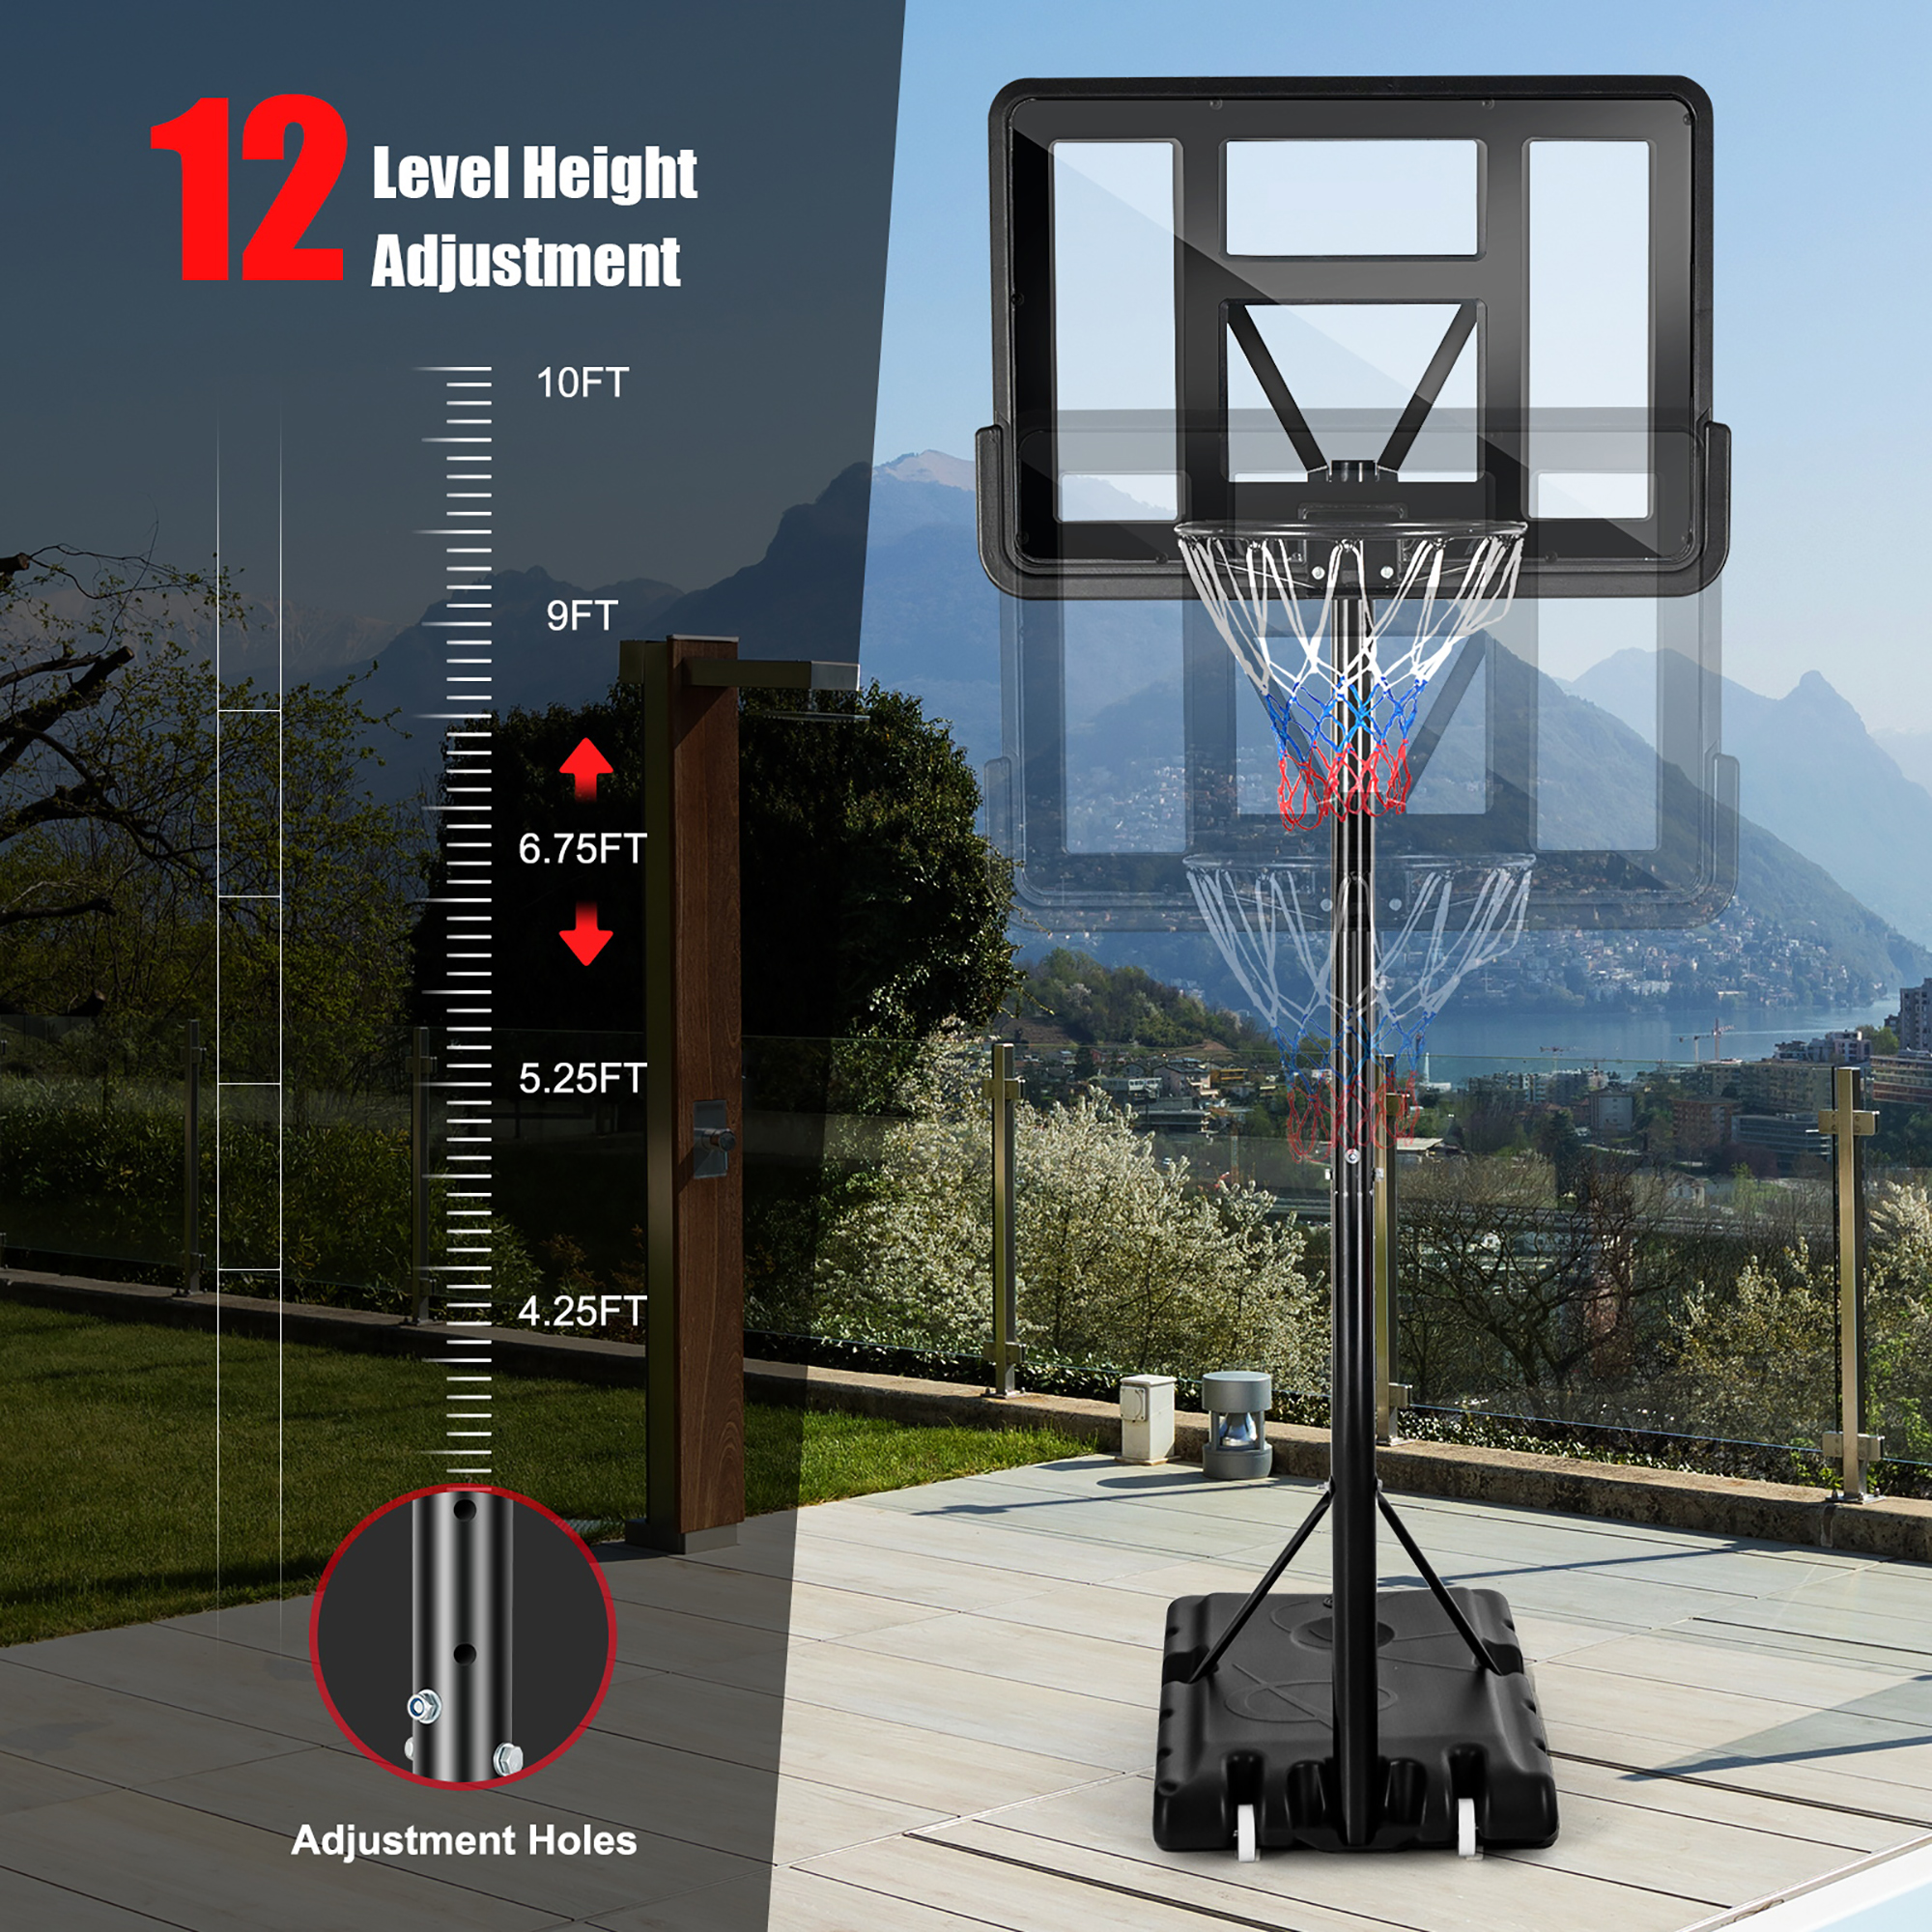 Costway Portable Basketball Hoop Stand Adjustable Height W/Shatterproof Backboard Wheels